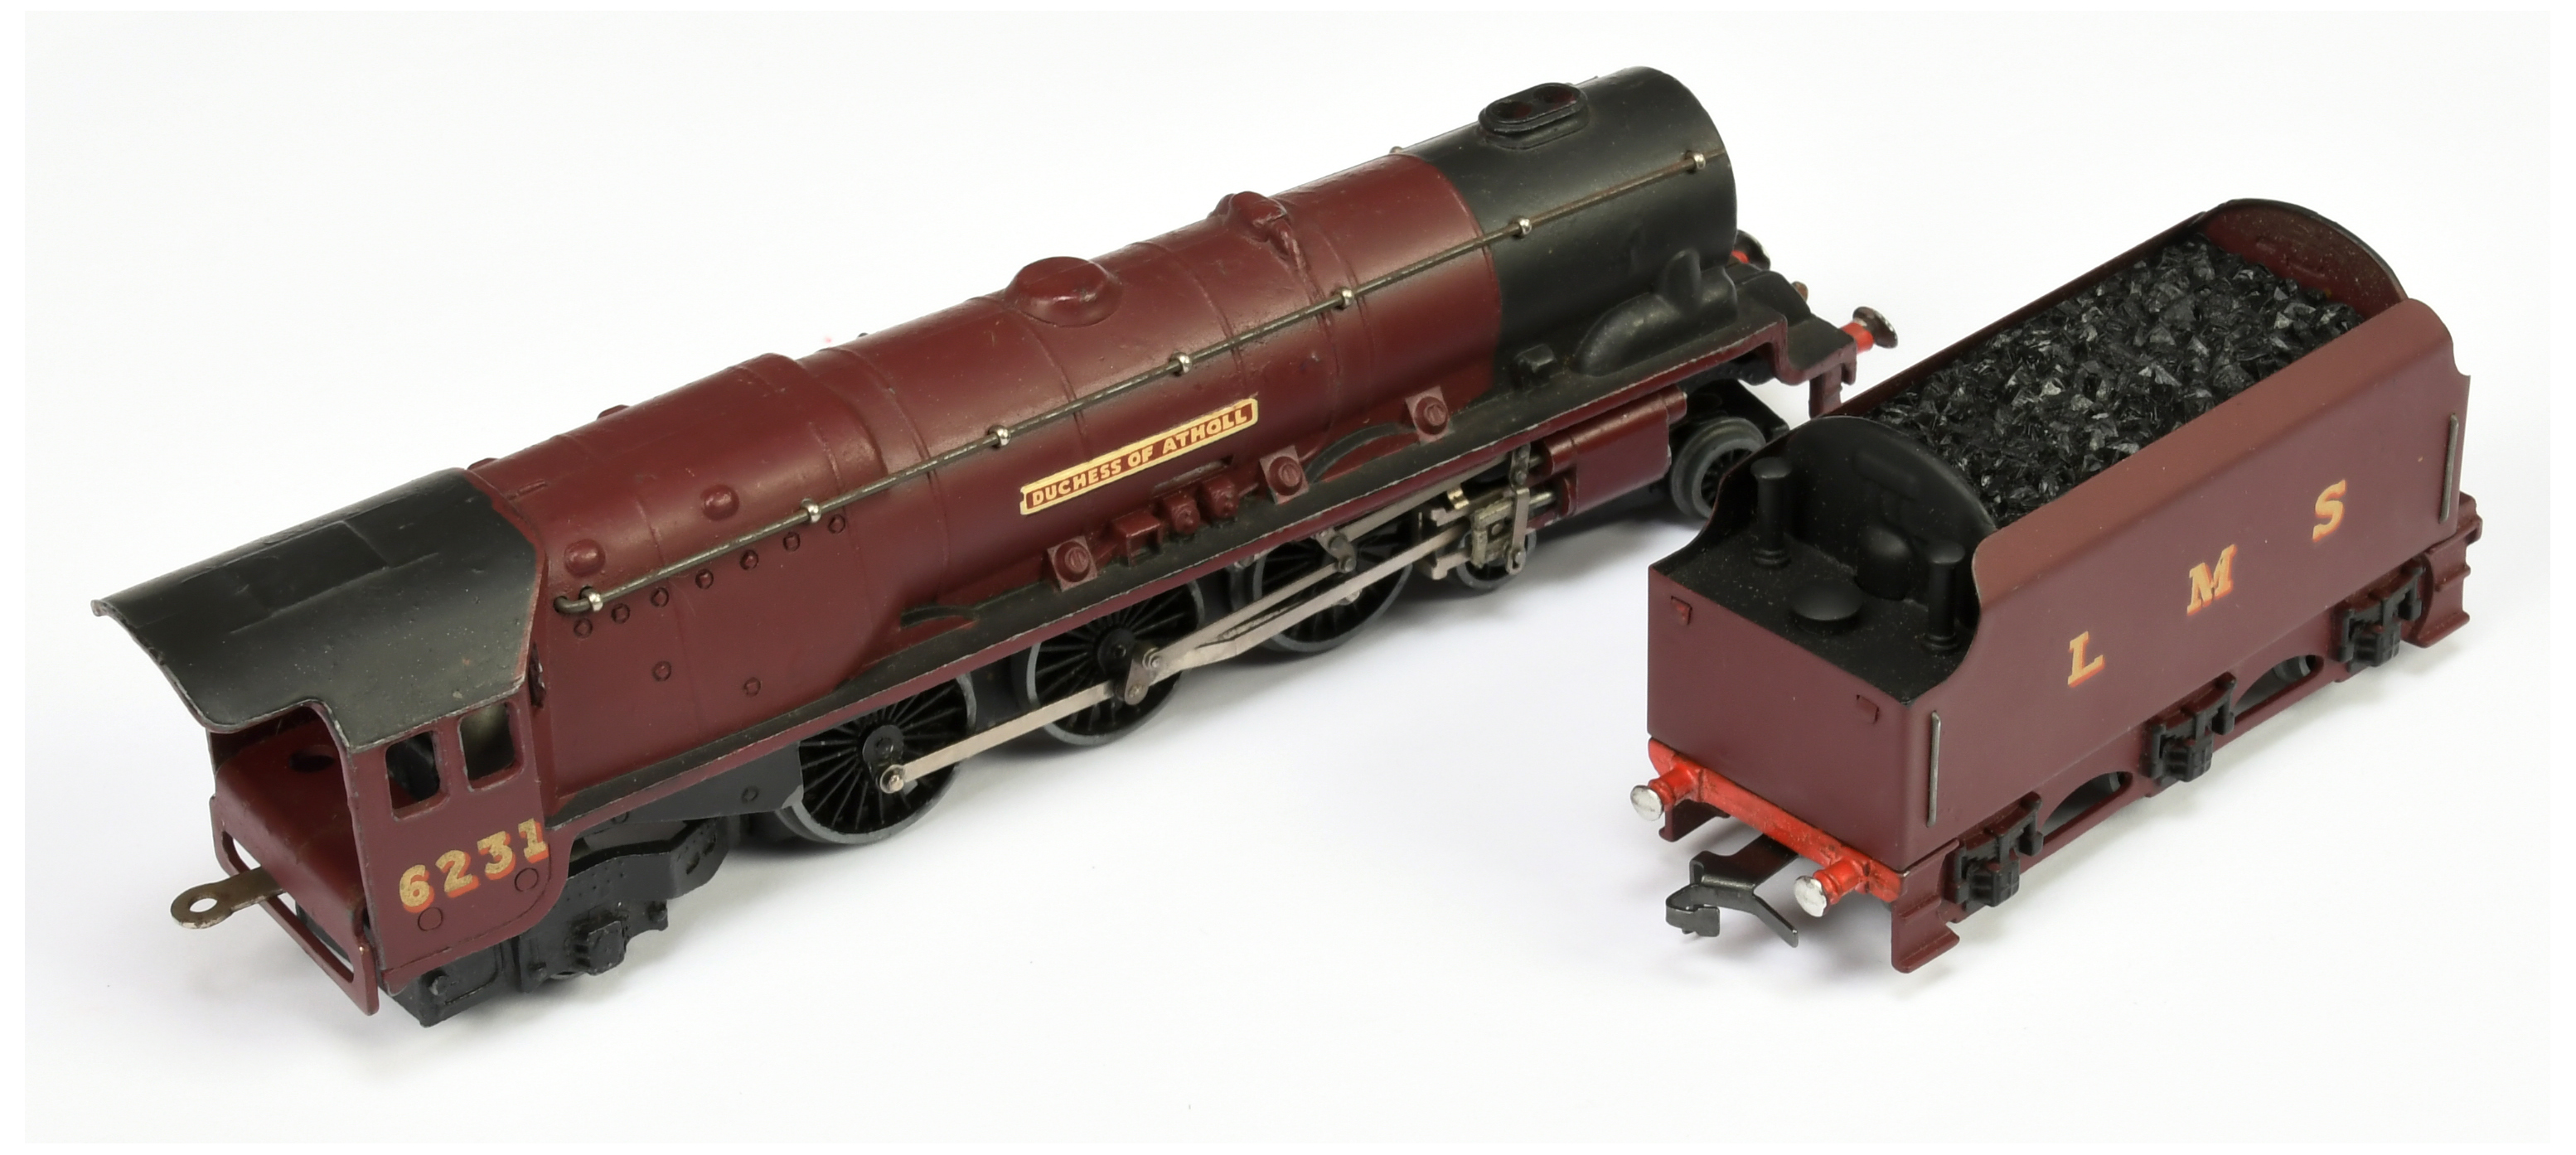 Hornby Dublo 3-rail EDL2/D2 4-6-2 LMS Princess Coronation Class Steam Locomotive No. 6231 "Duches... - Image 2 of 2